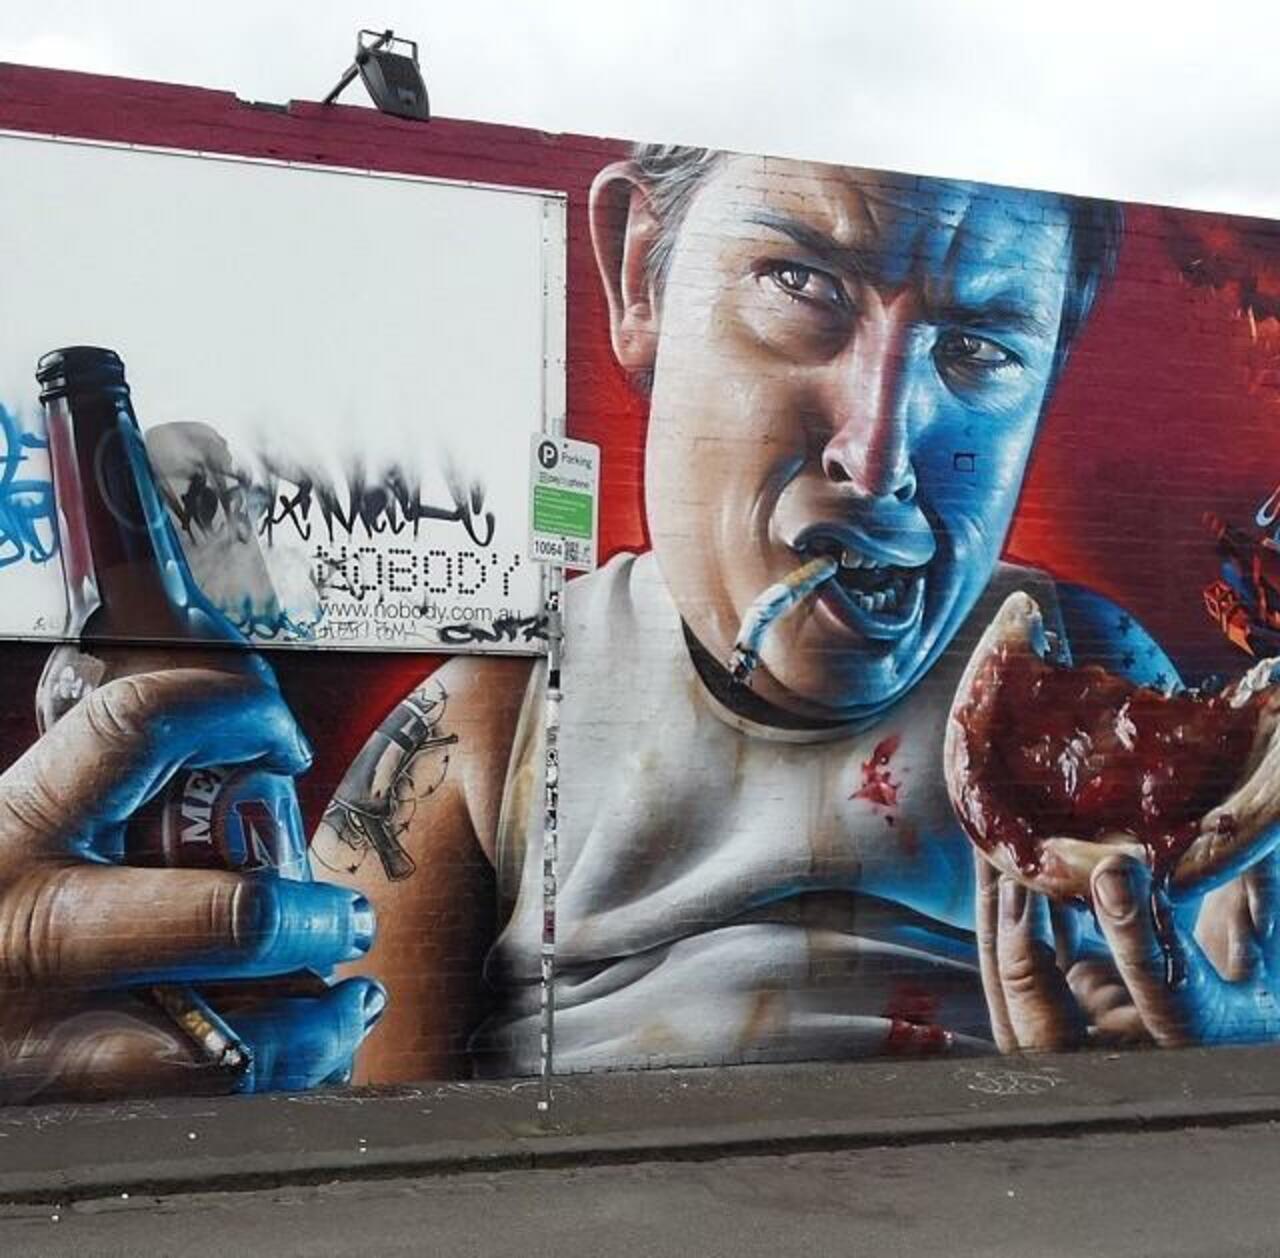 Smug One x Sofles x Adnate hyperrealistic Street Art colab located in Melbourne #art #mural #graffiti #streetart http://t.co/MVGEAPWJxf